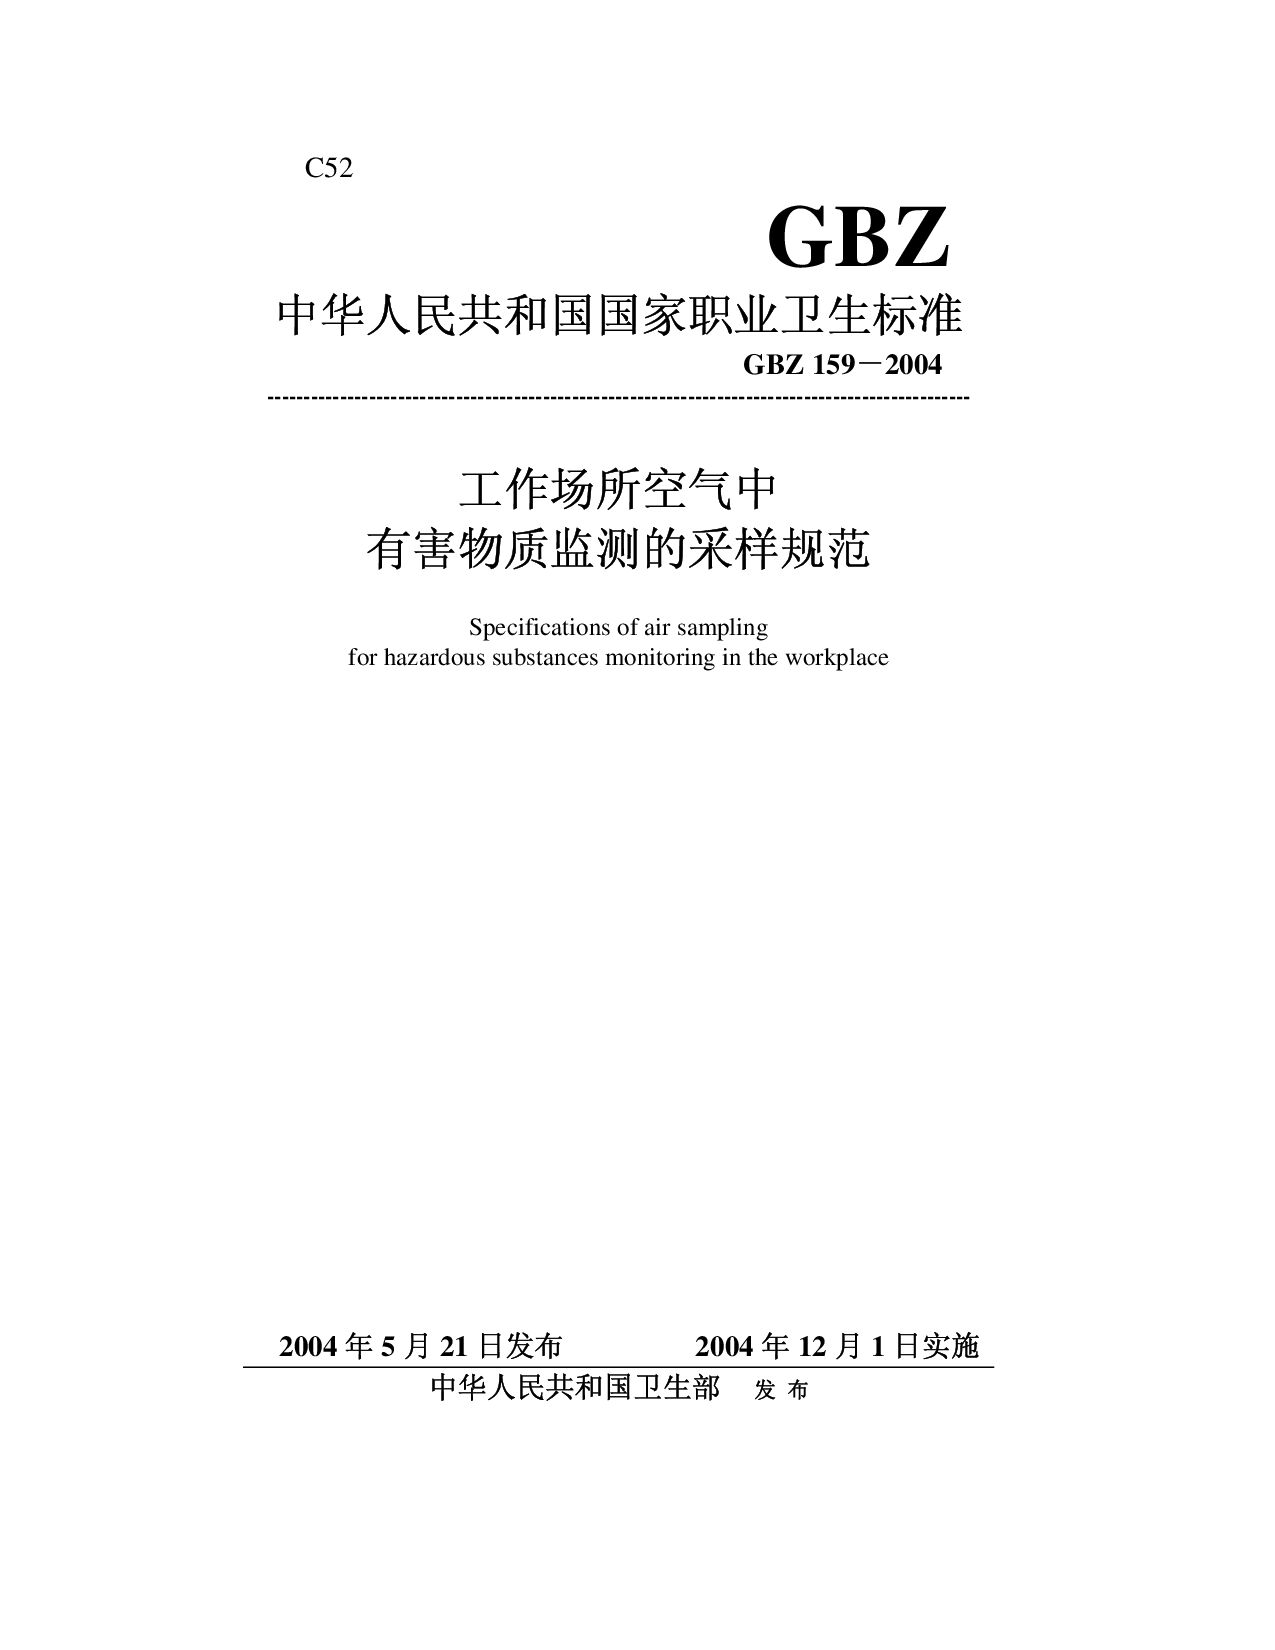 GBZ 159-2004封面图